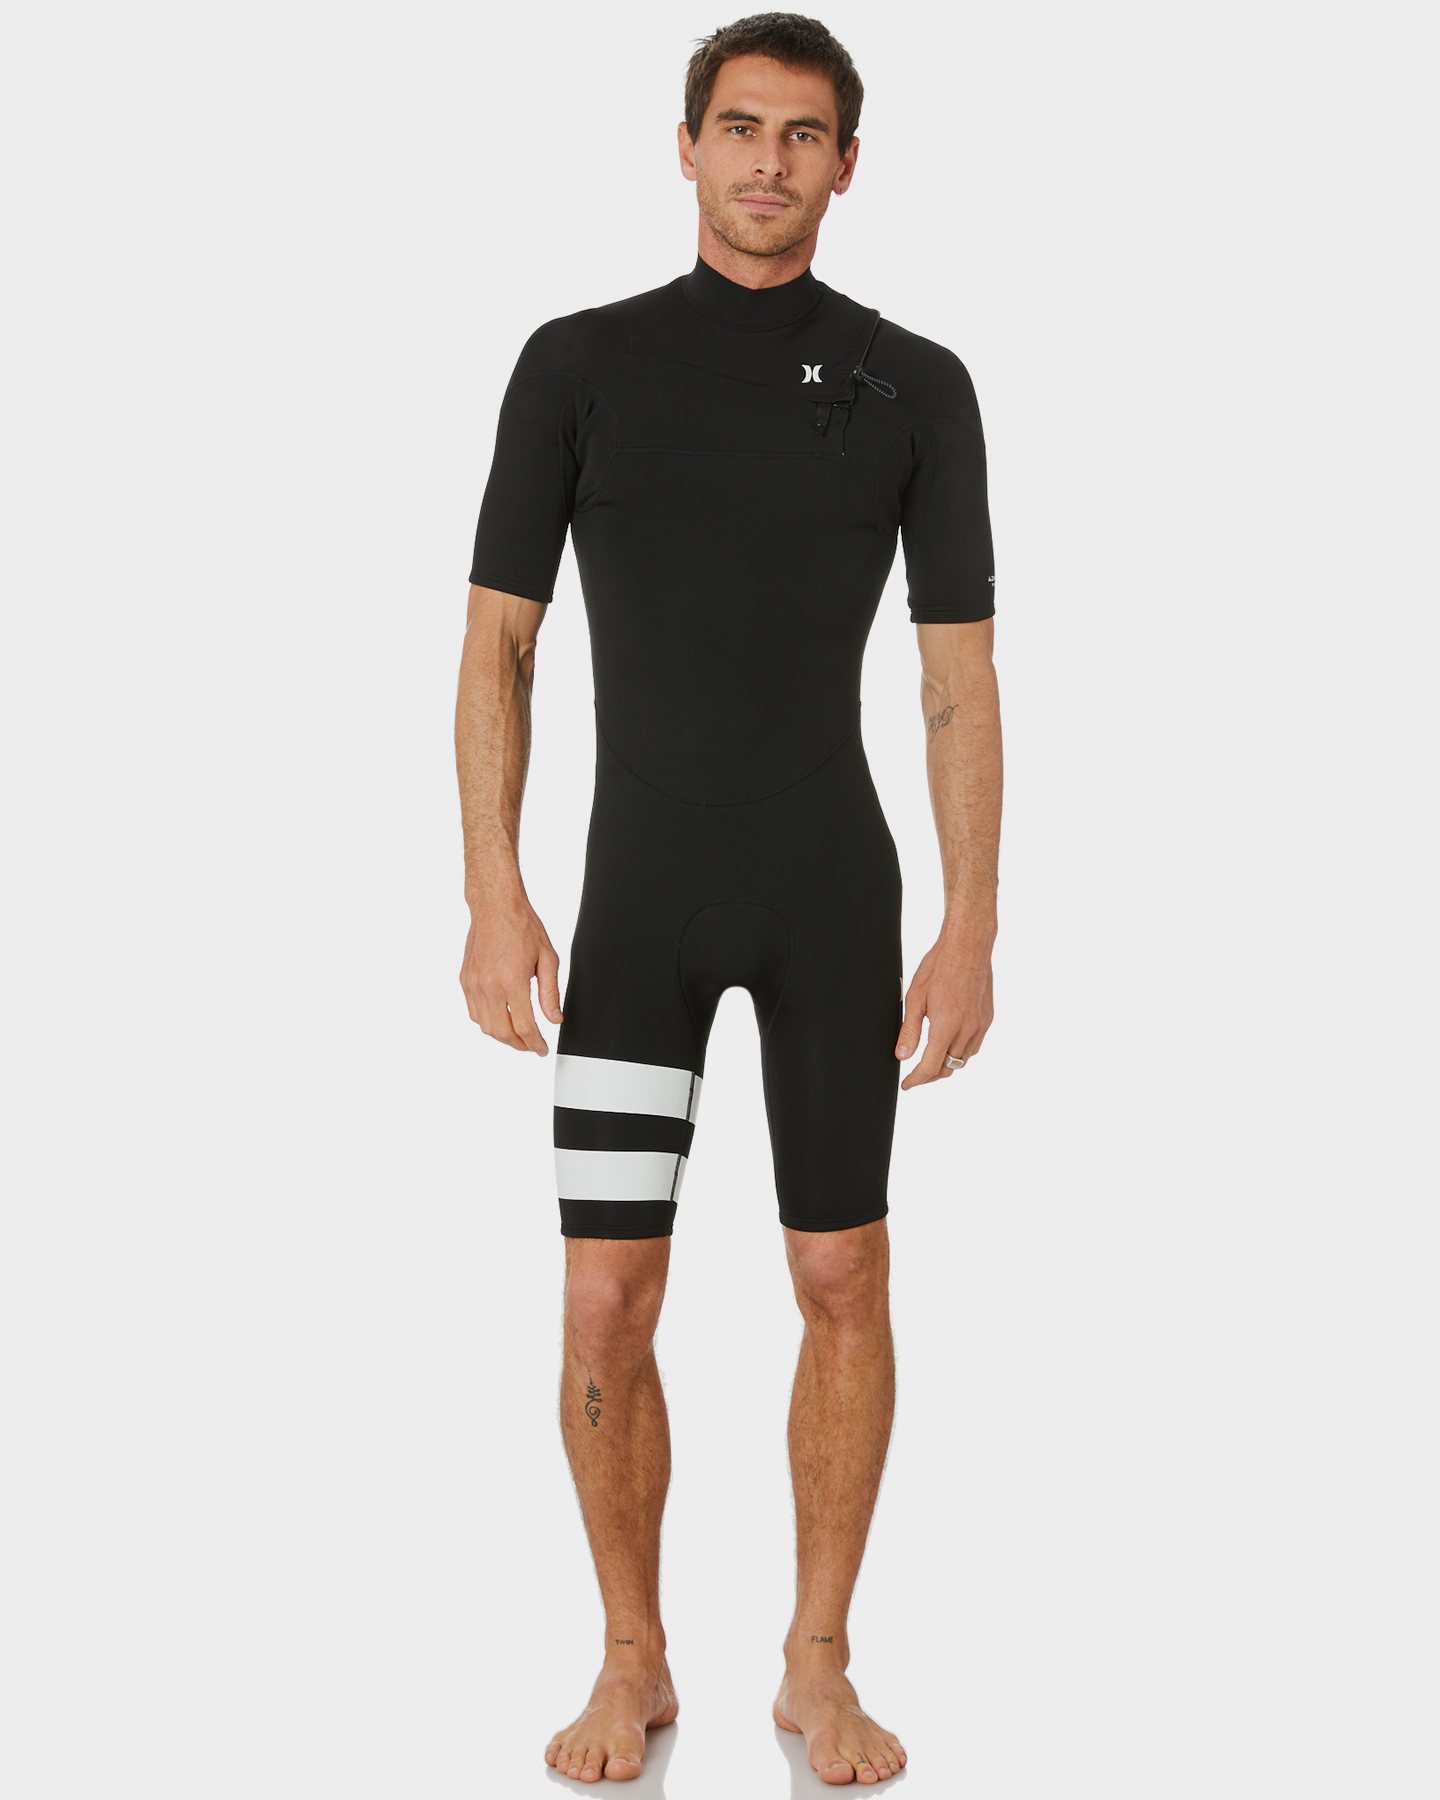 Hurley Advantage Plus 2Mm Spring Suit - Black | SurfStitch